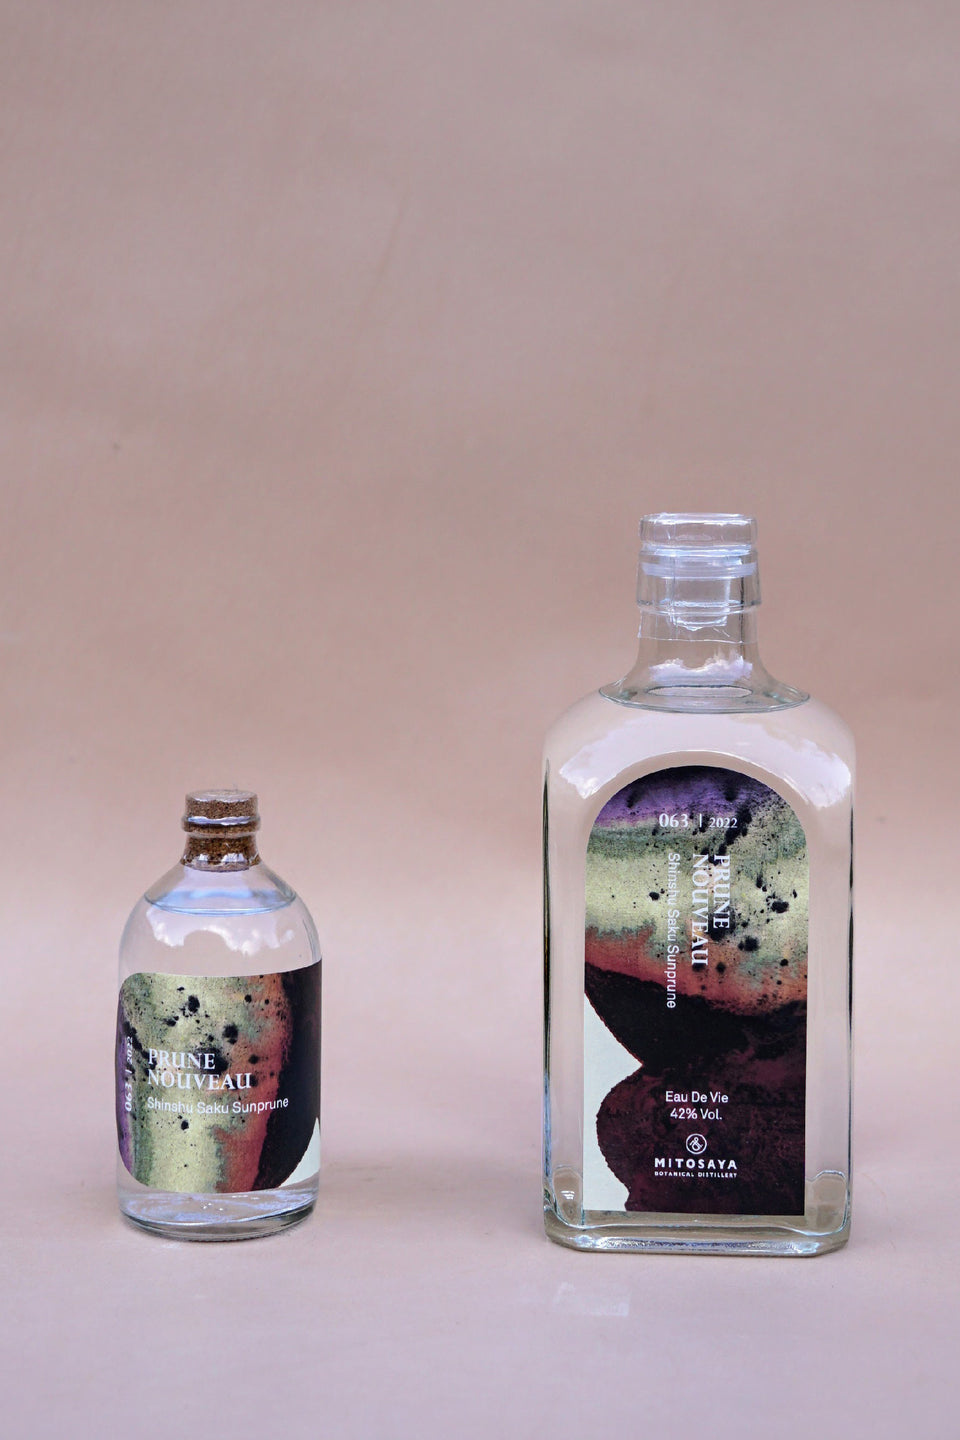 Products – mitosaya botanical distillery